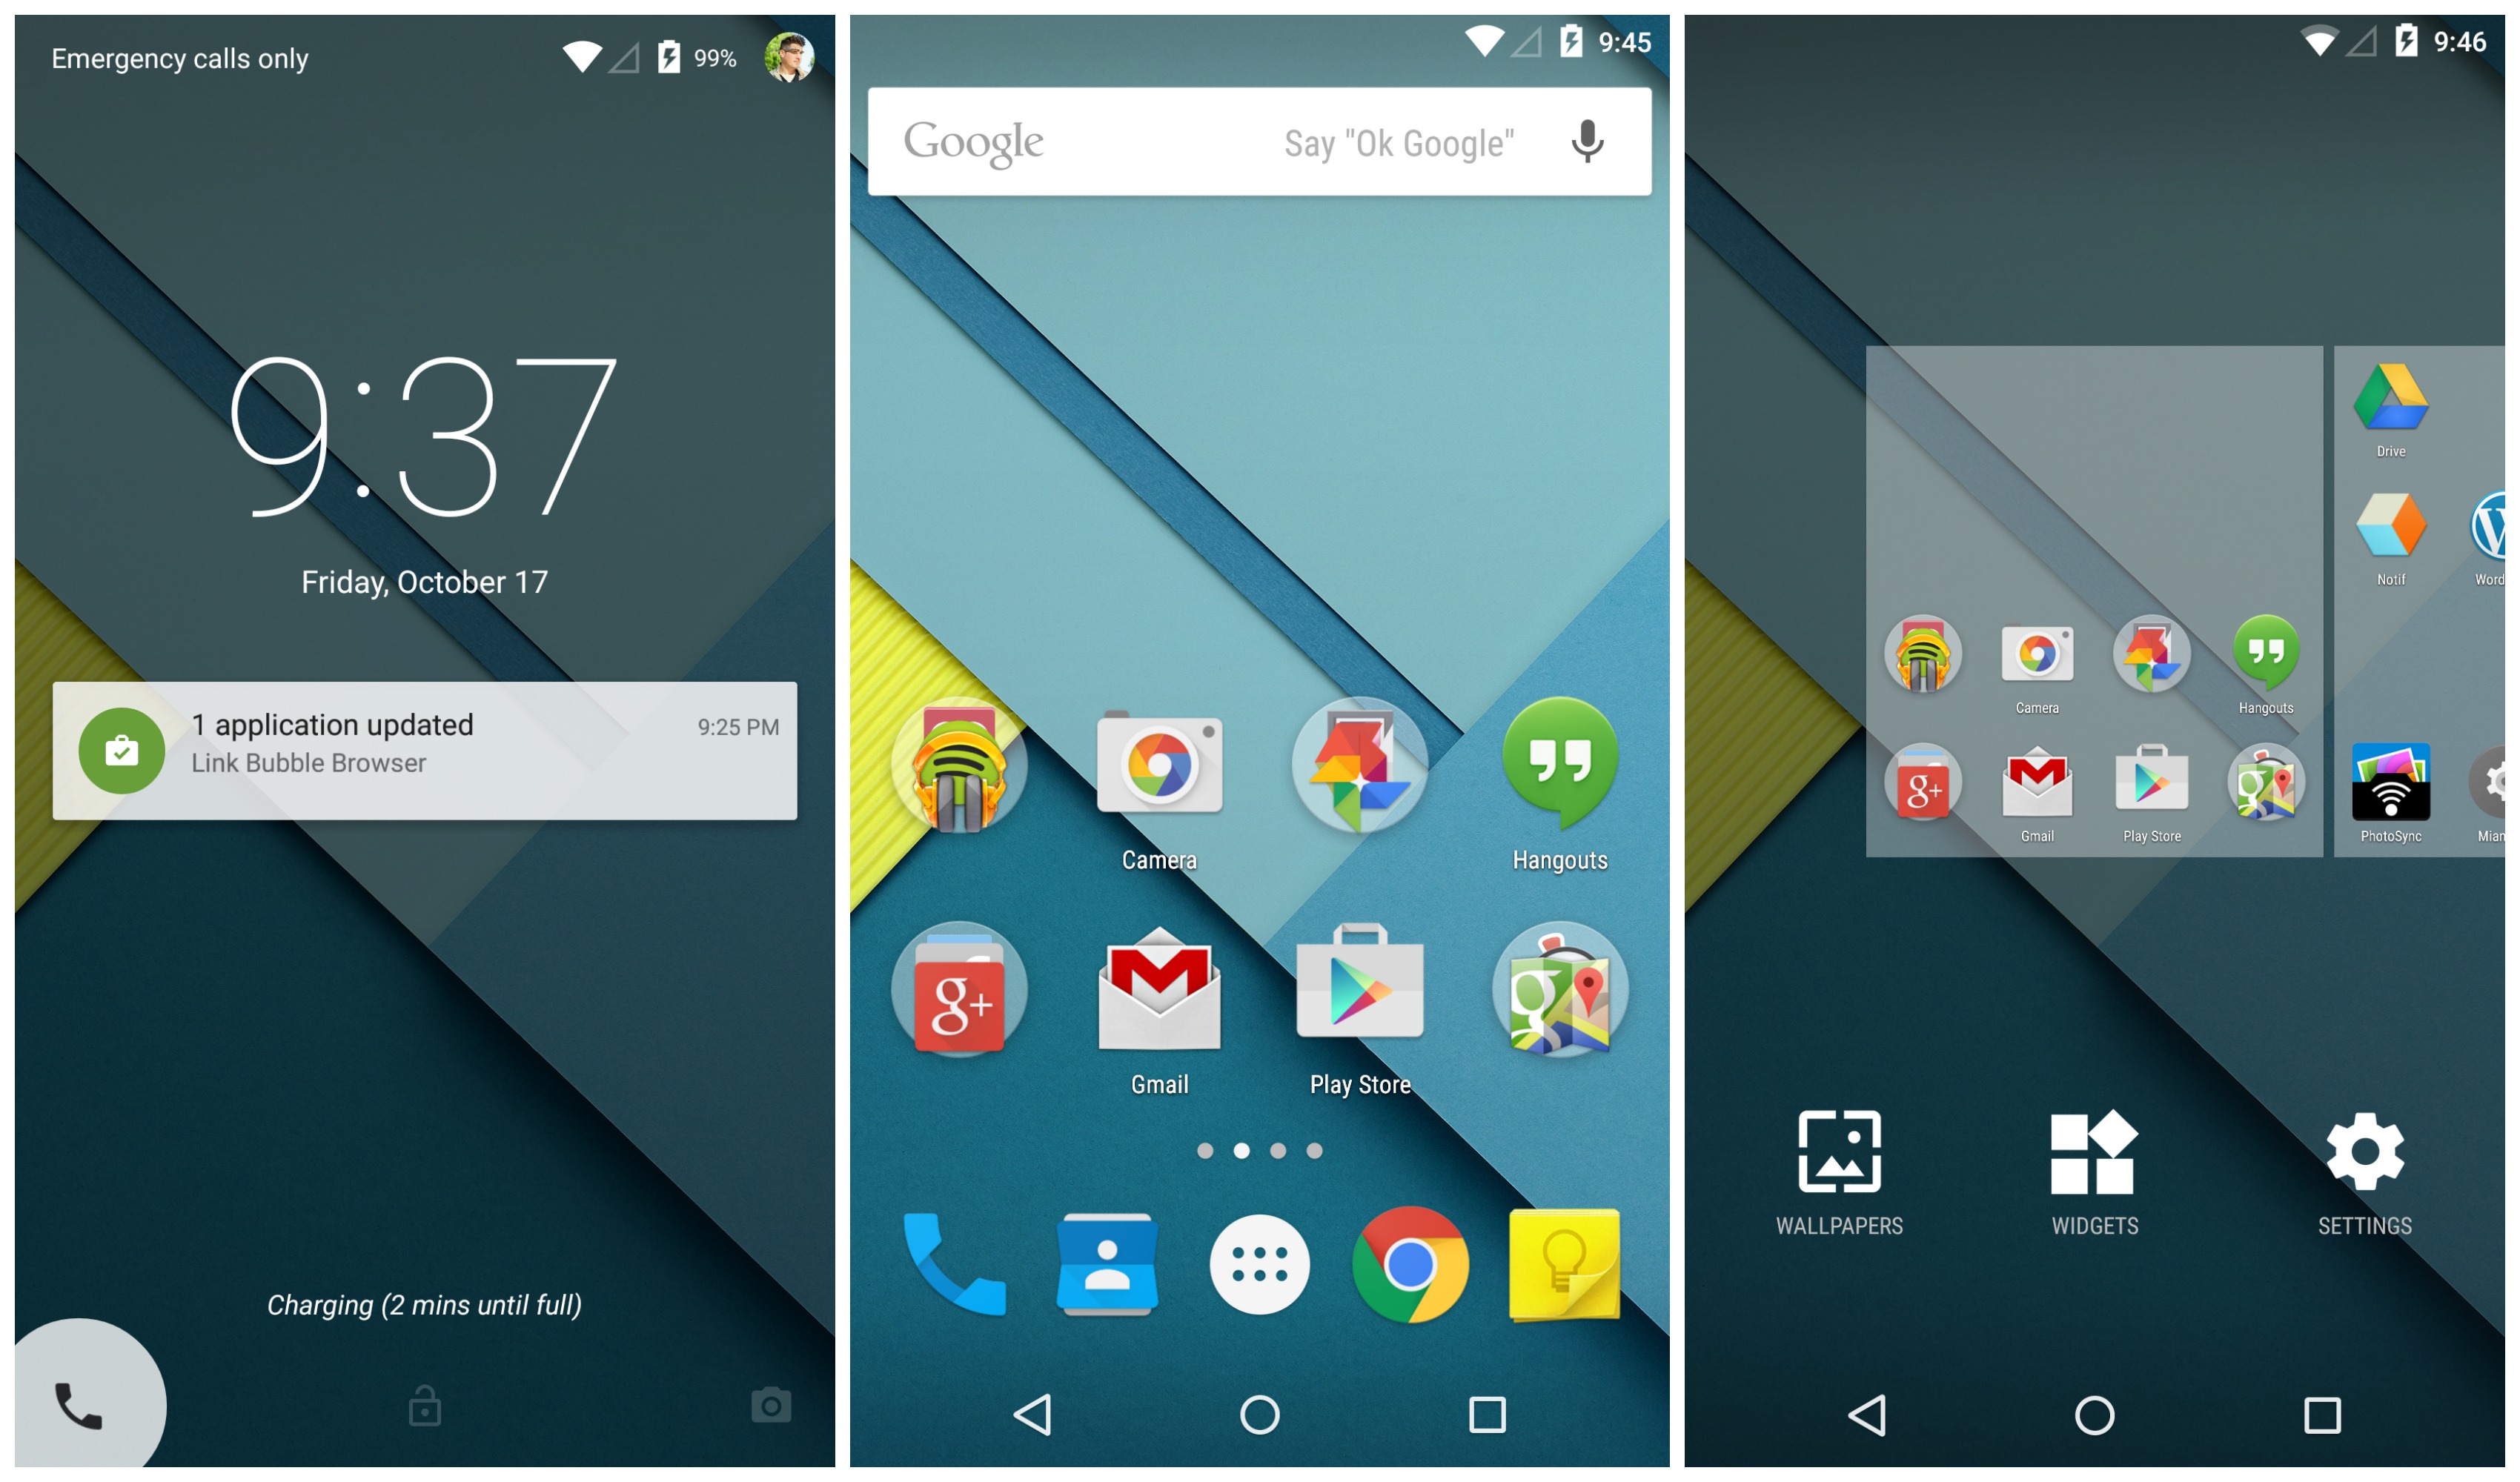 Https apk 1.5. Android 5.1 Lollipop. Android 5.0 / 5.1 Lollipop. Версия андроид 5.1. Android 5.0 Lollipop 2014.